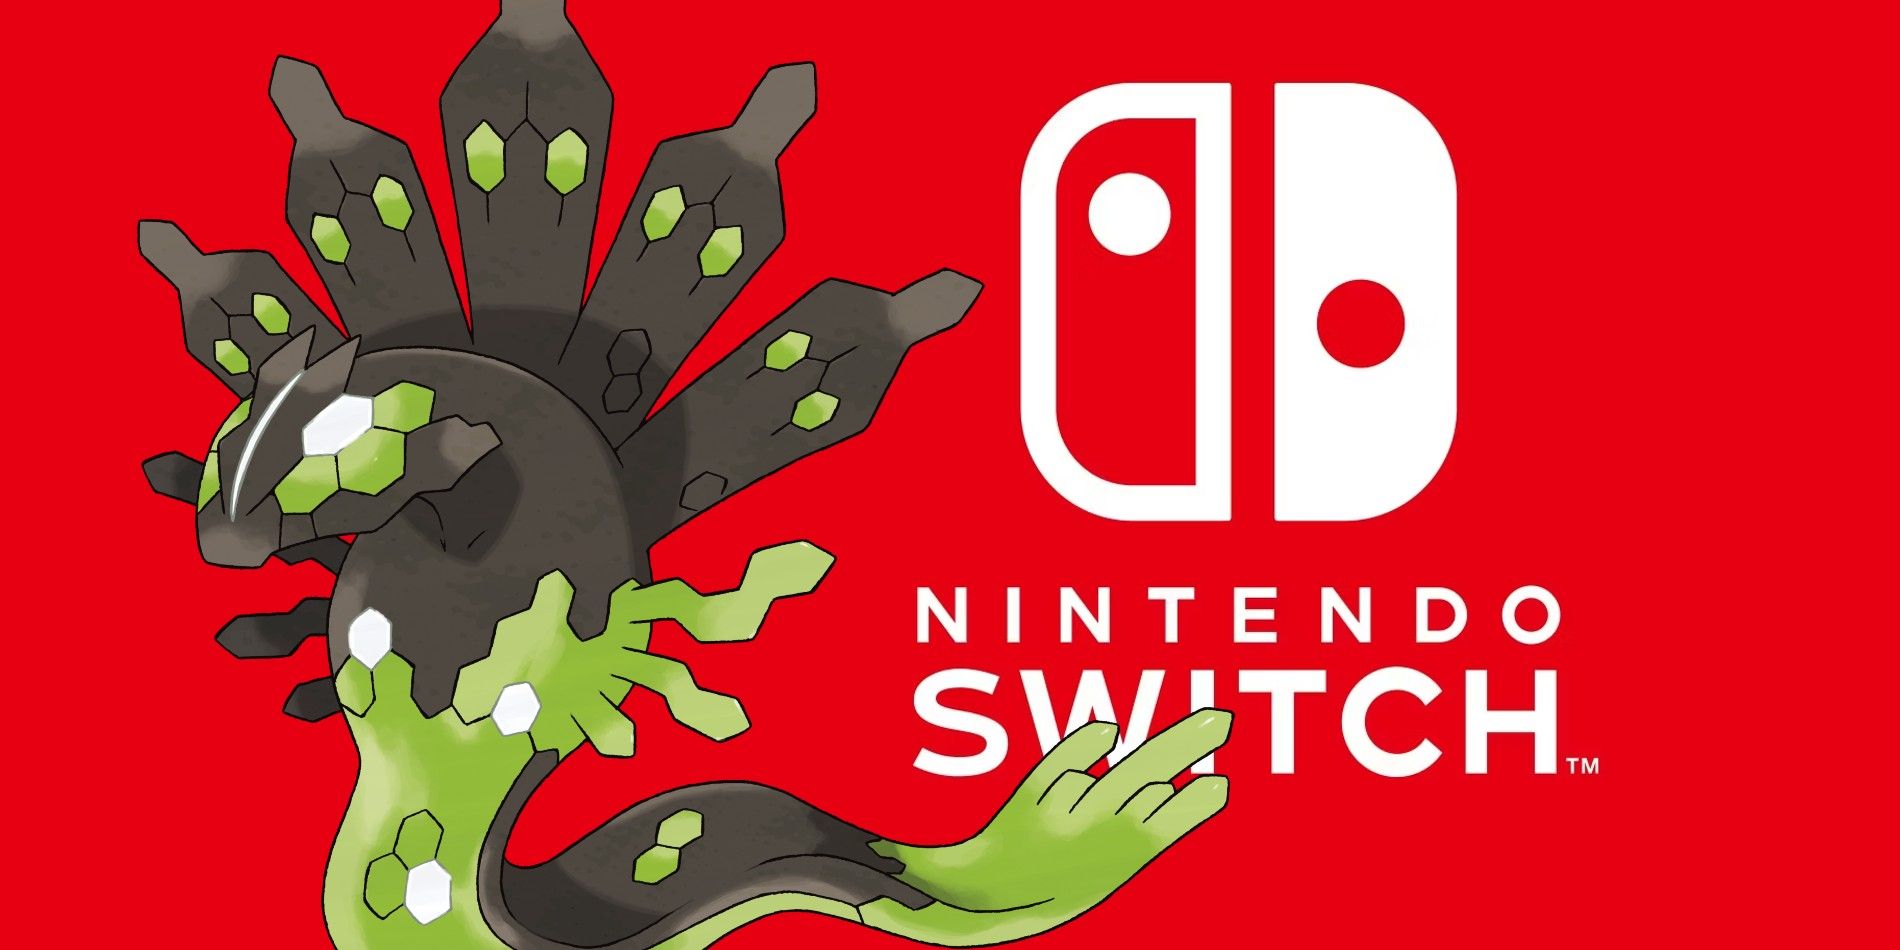 The Nintendo Switch Logo alongside an image of the Pokémon Zygarde.